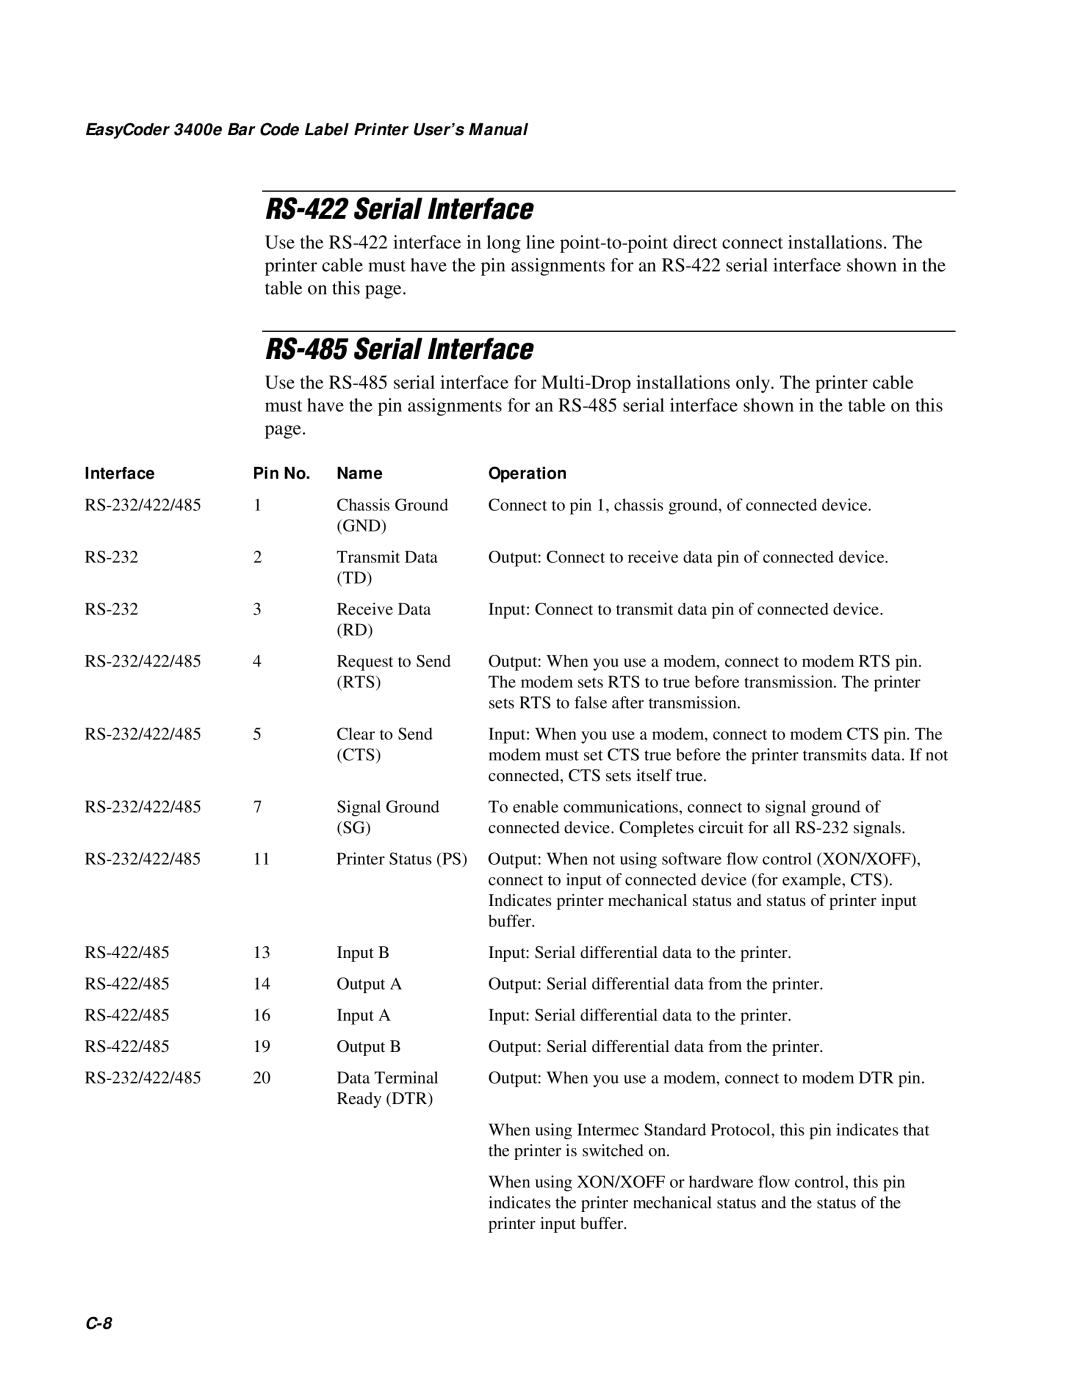 IBM RS-422 Serial Interface, RS-485 Serial Interface, EasyCoder 3400e Bar Code Label Printer User’s Manual, Pin No 